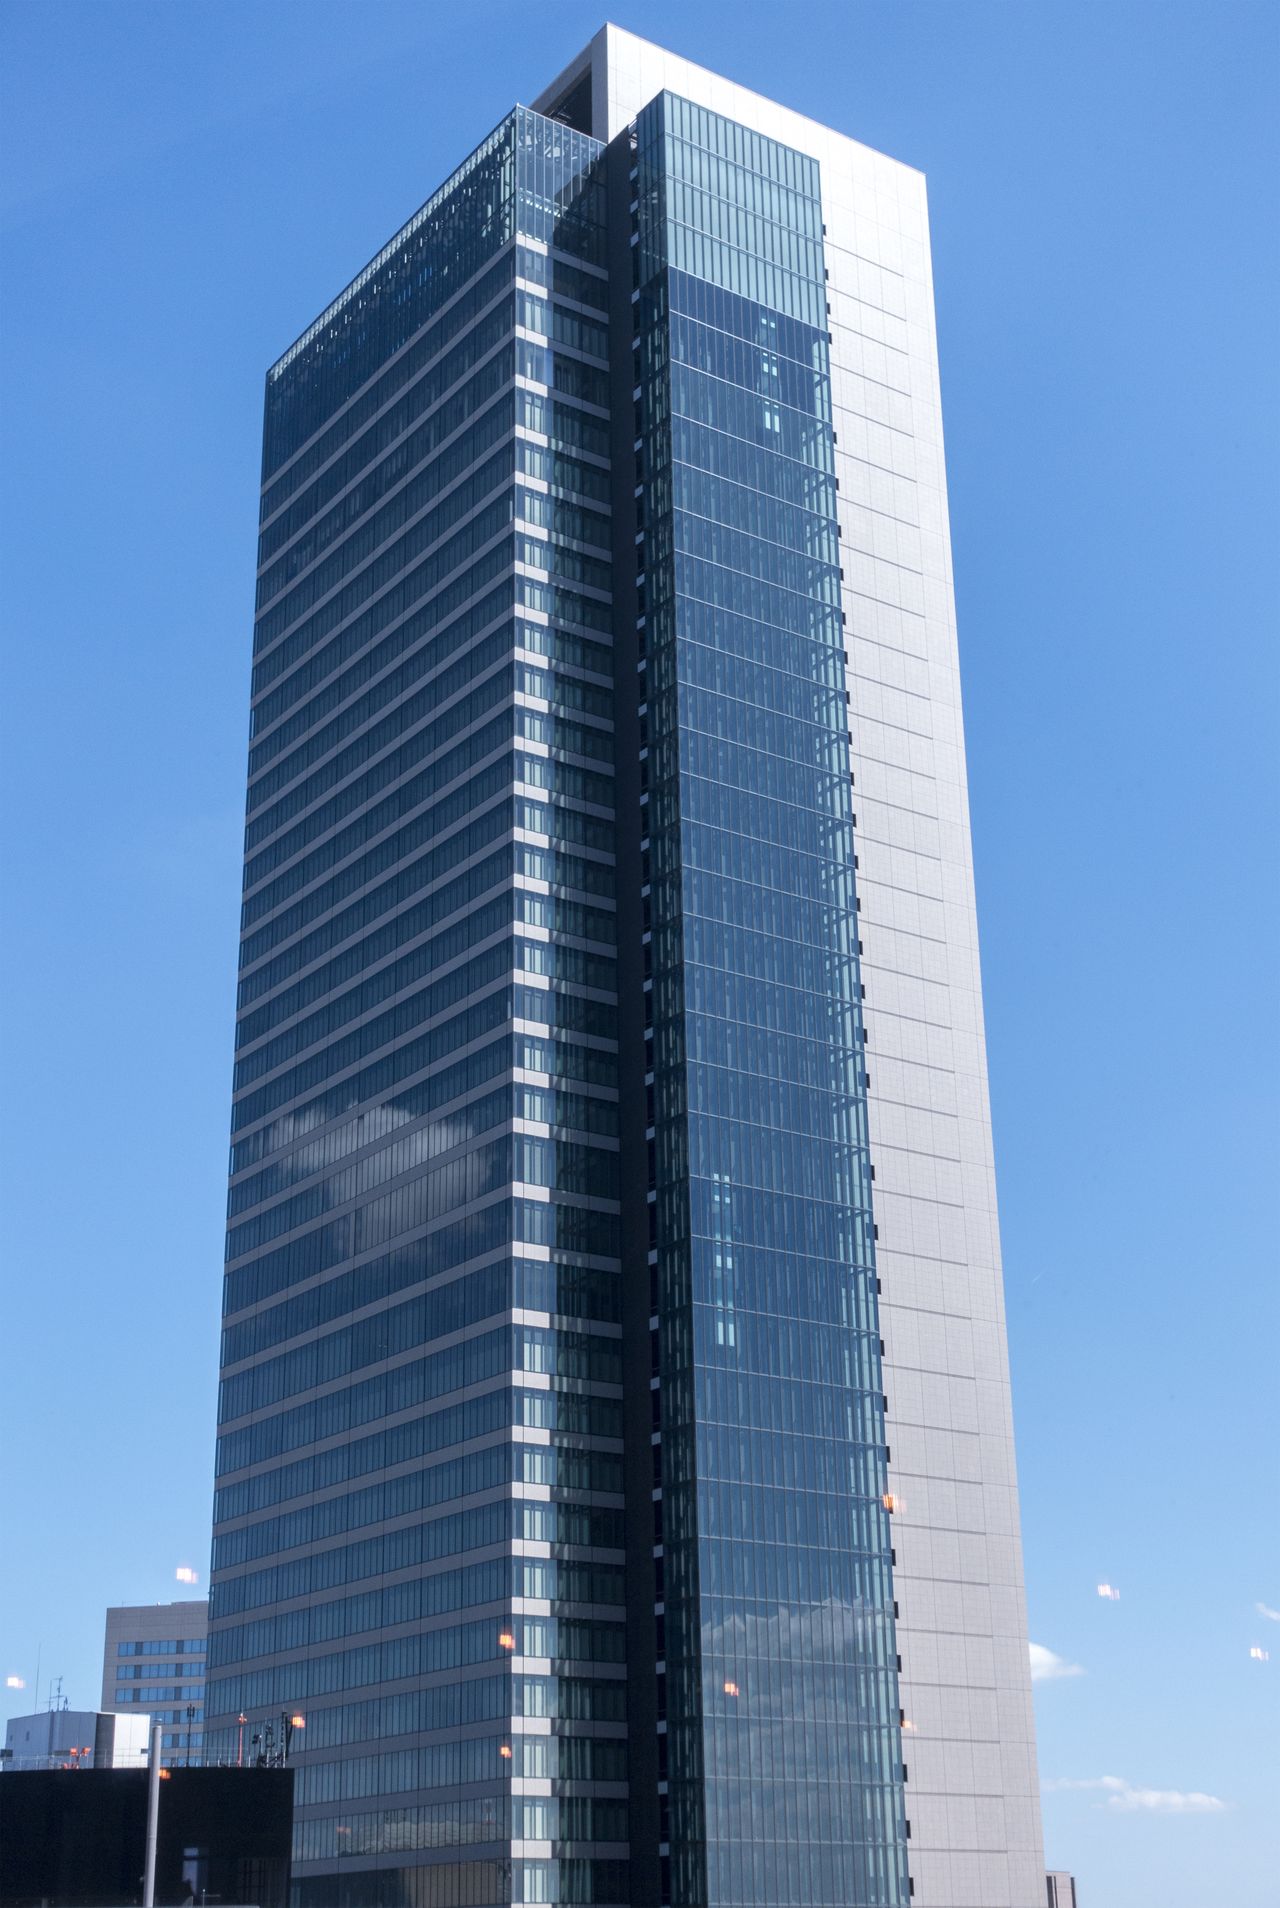 Raina's Japan Travel Journal - Japan's new tallest building opens